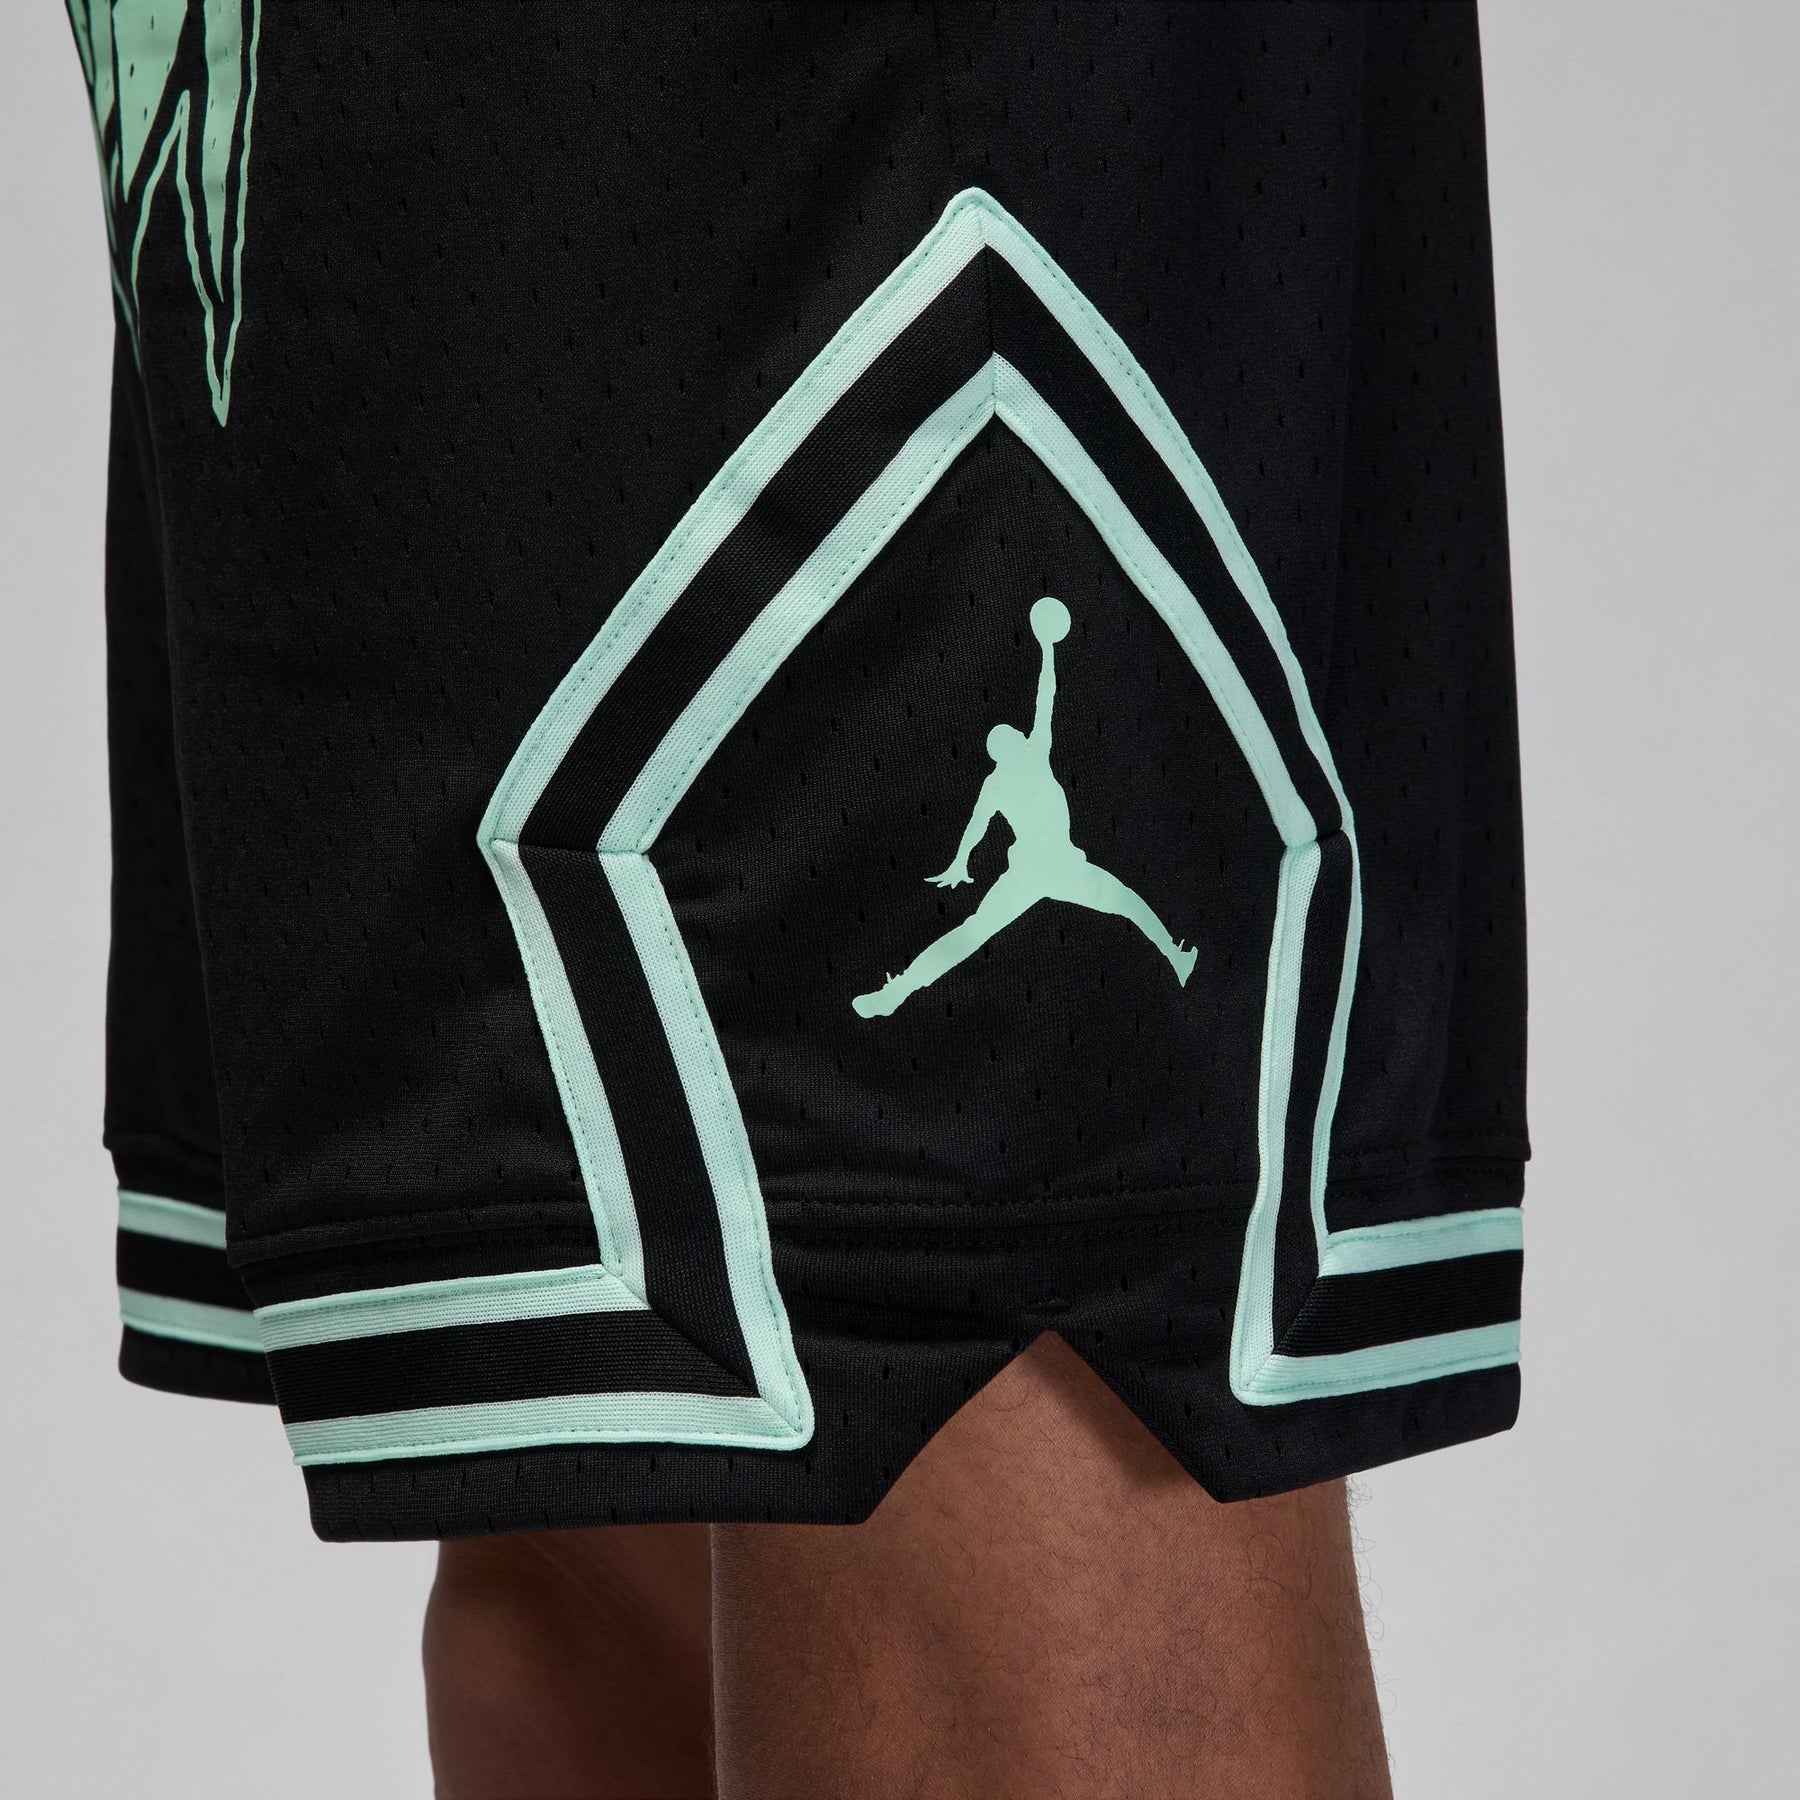 Jordan Sport Shorts "Black"